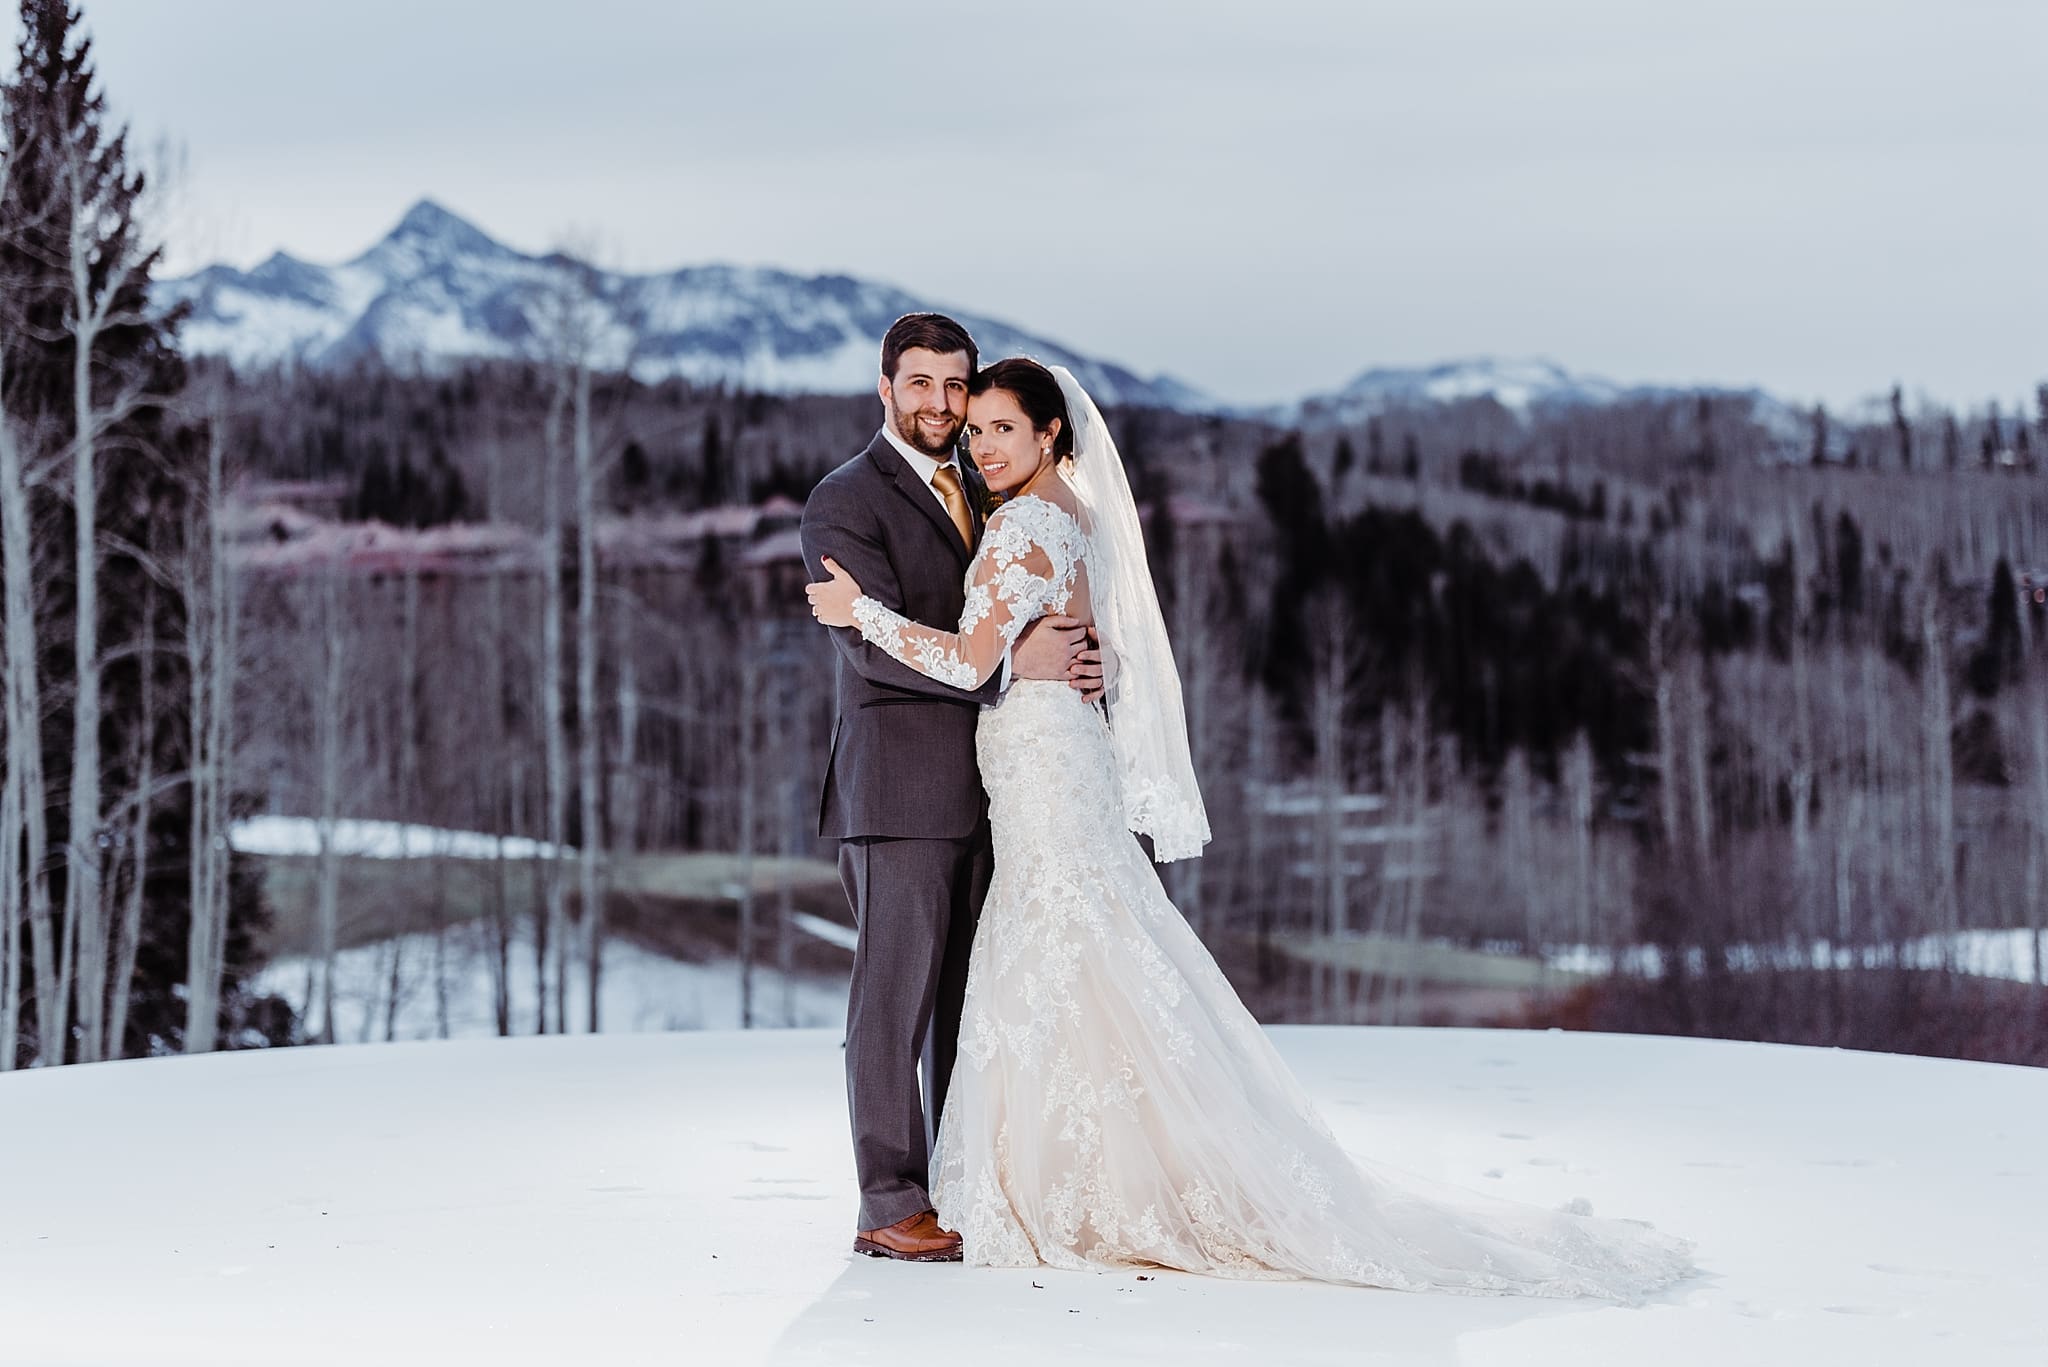 OCF wedding portraits in the snow